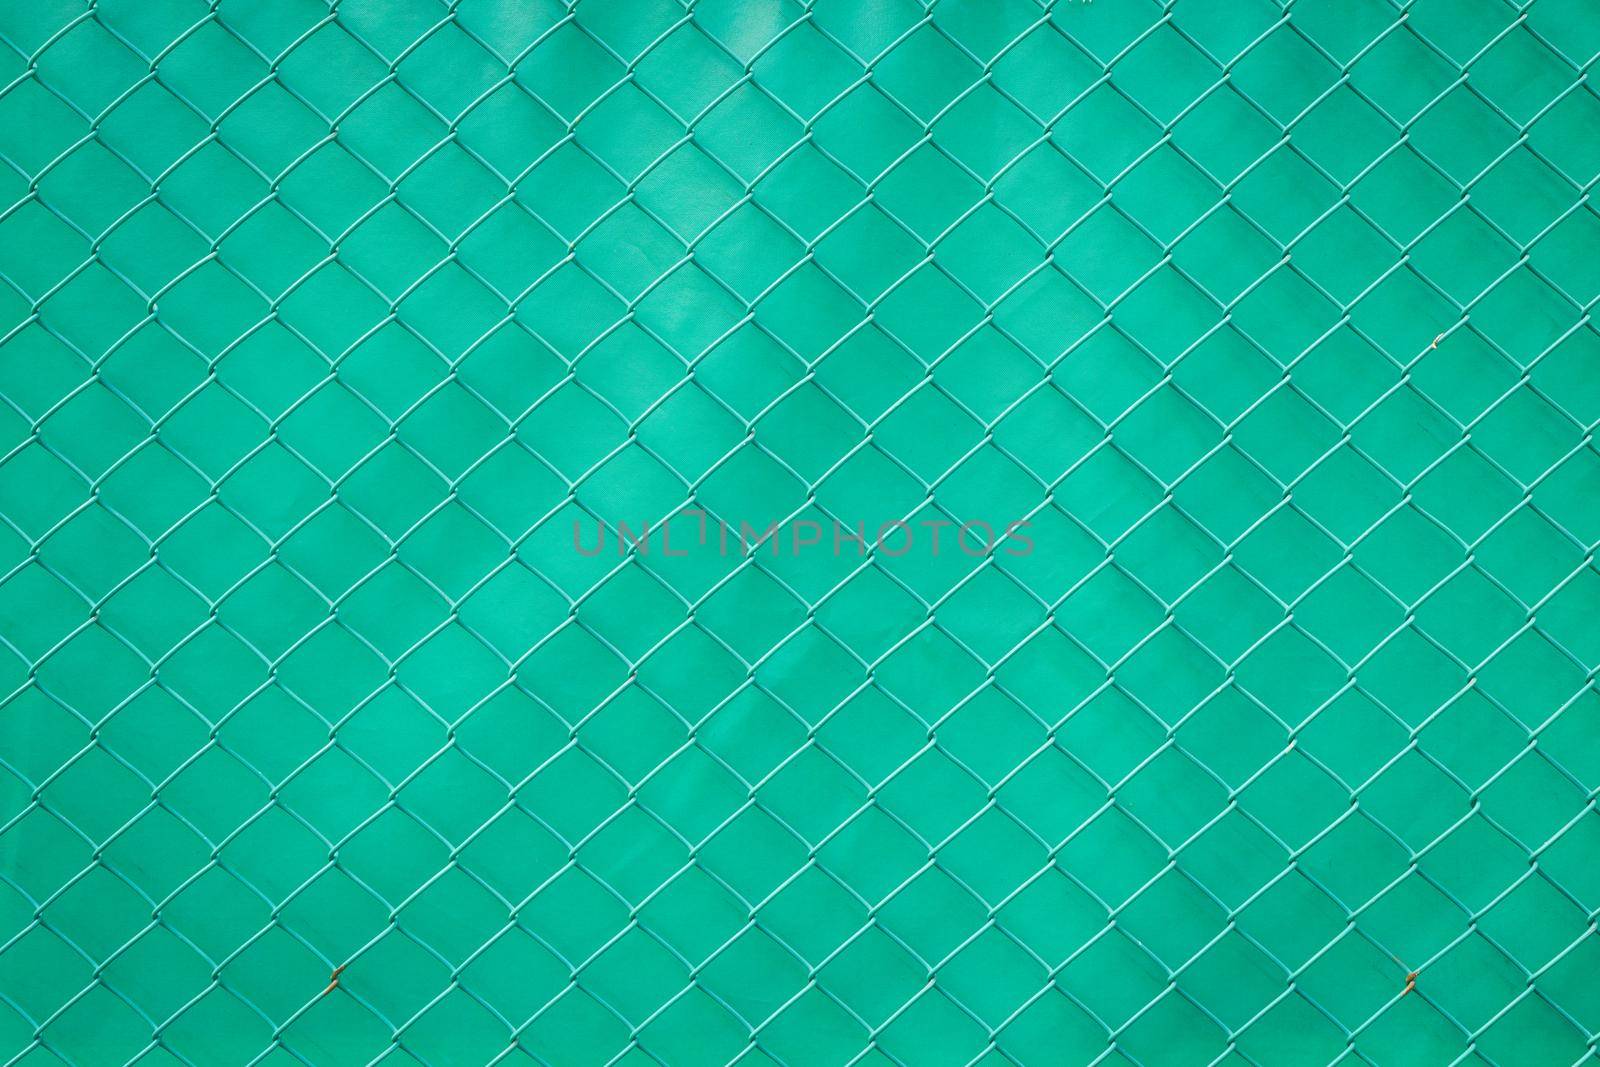 Steel mesh rusty on green background.